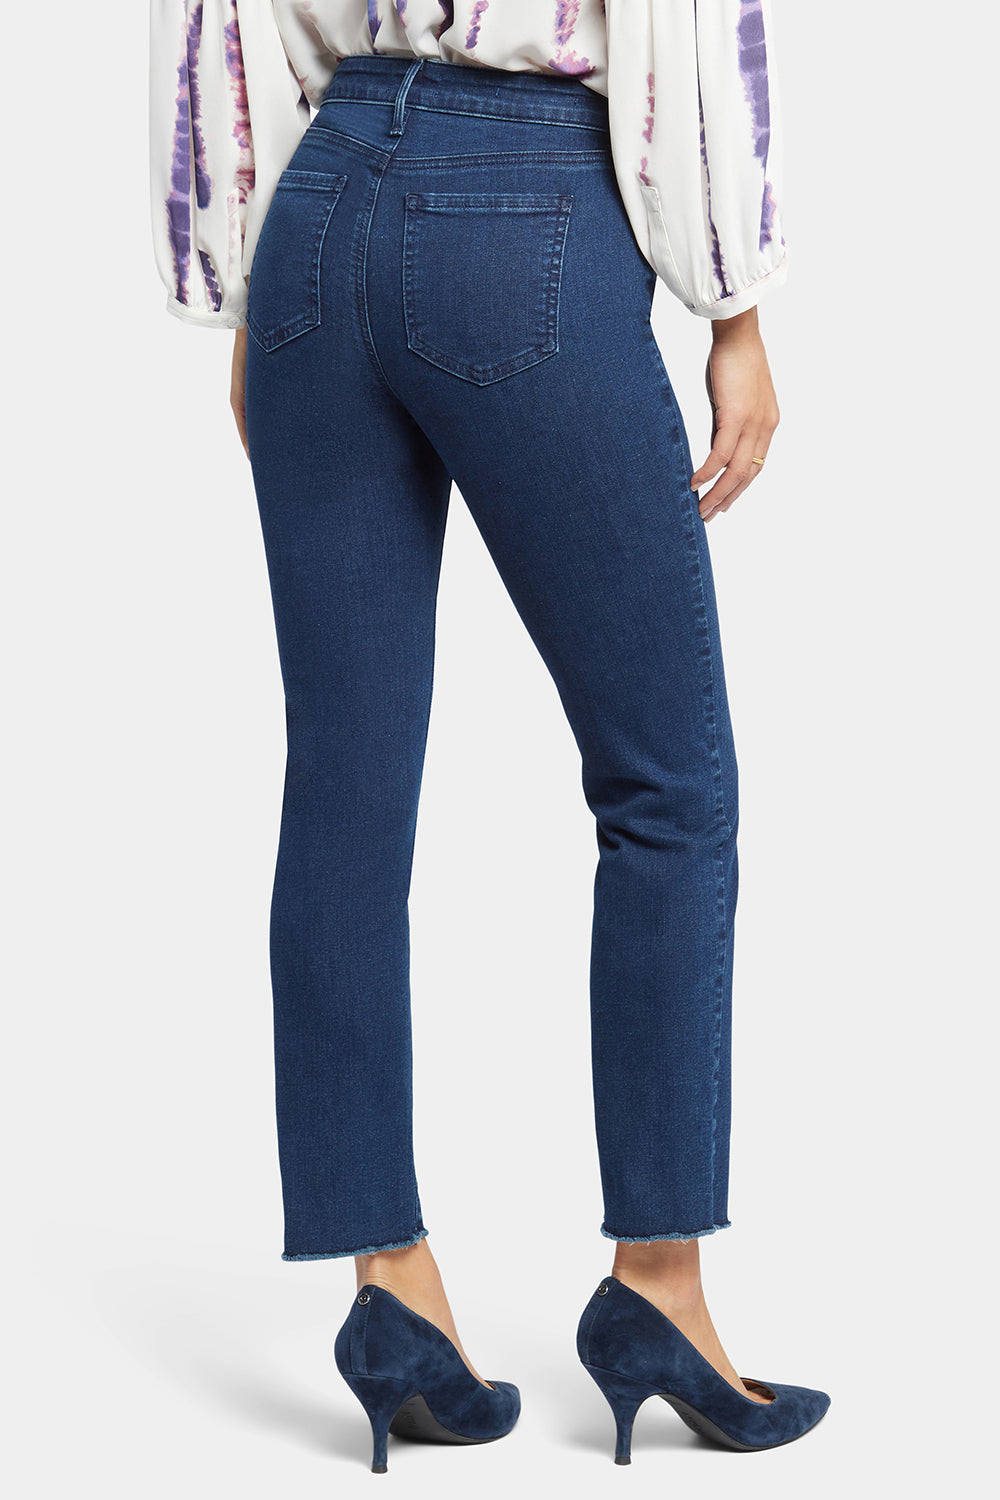 NYDJ Sheri Slim Ankle Jeans With Frayed Hems - Mystique